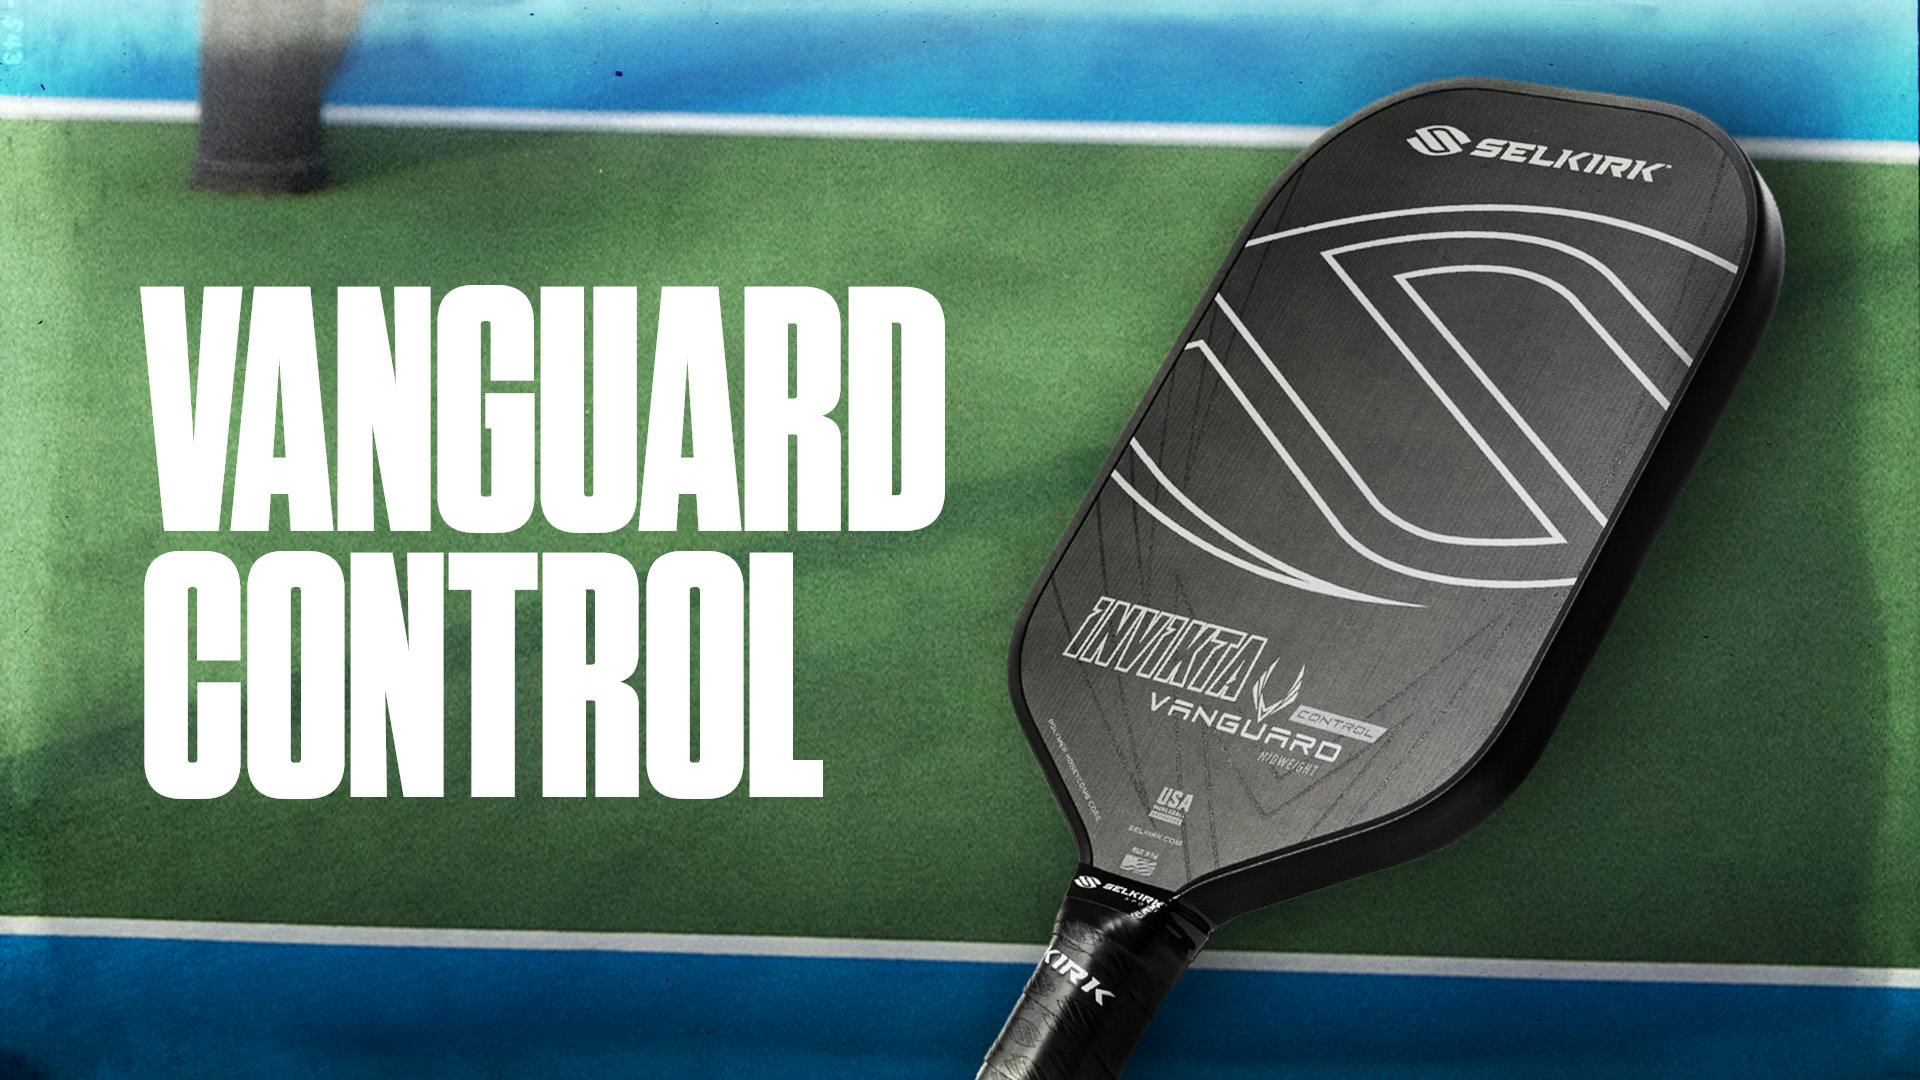 Selkirk Vanguard Control